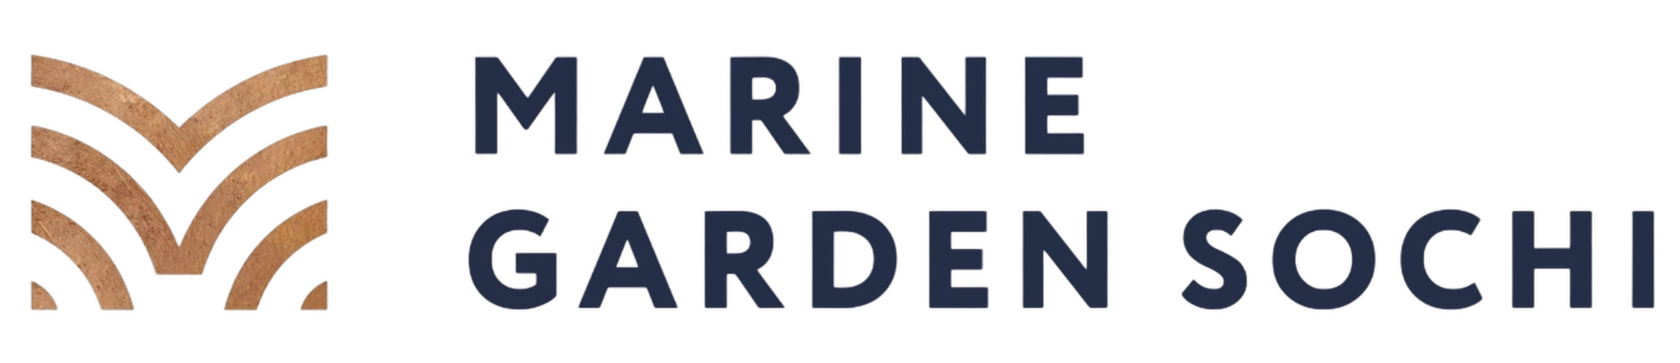 Marine Garden Sochi 5 лого